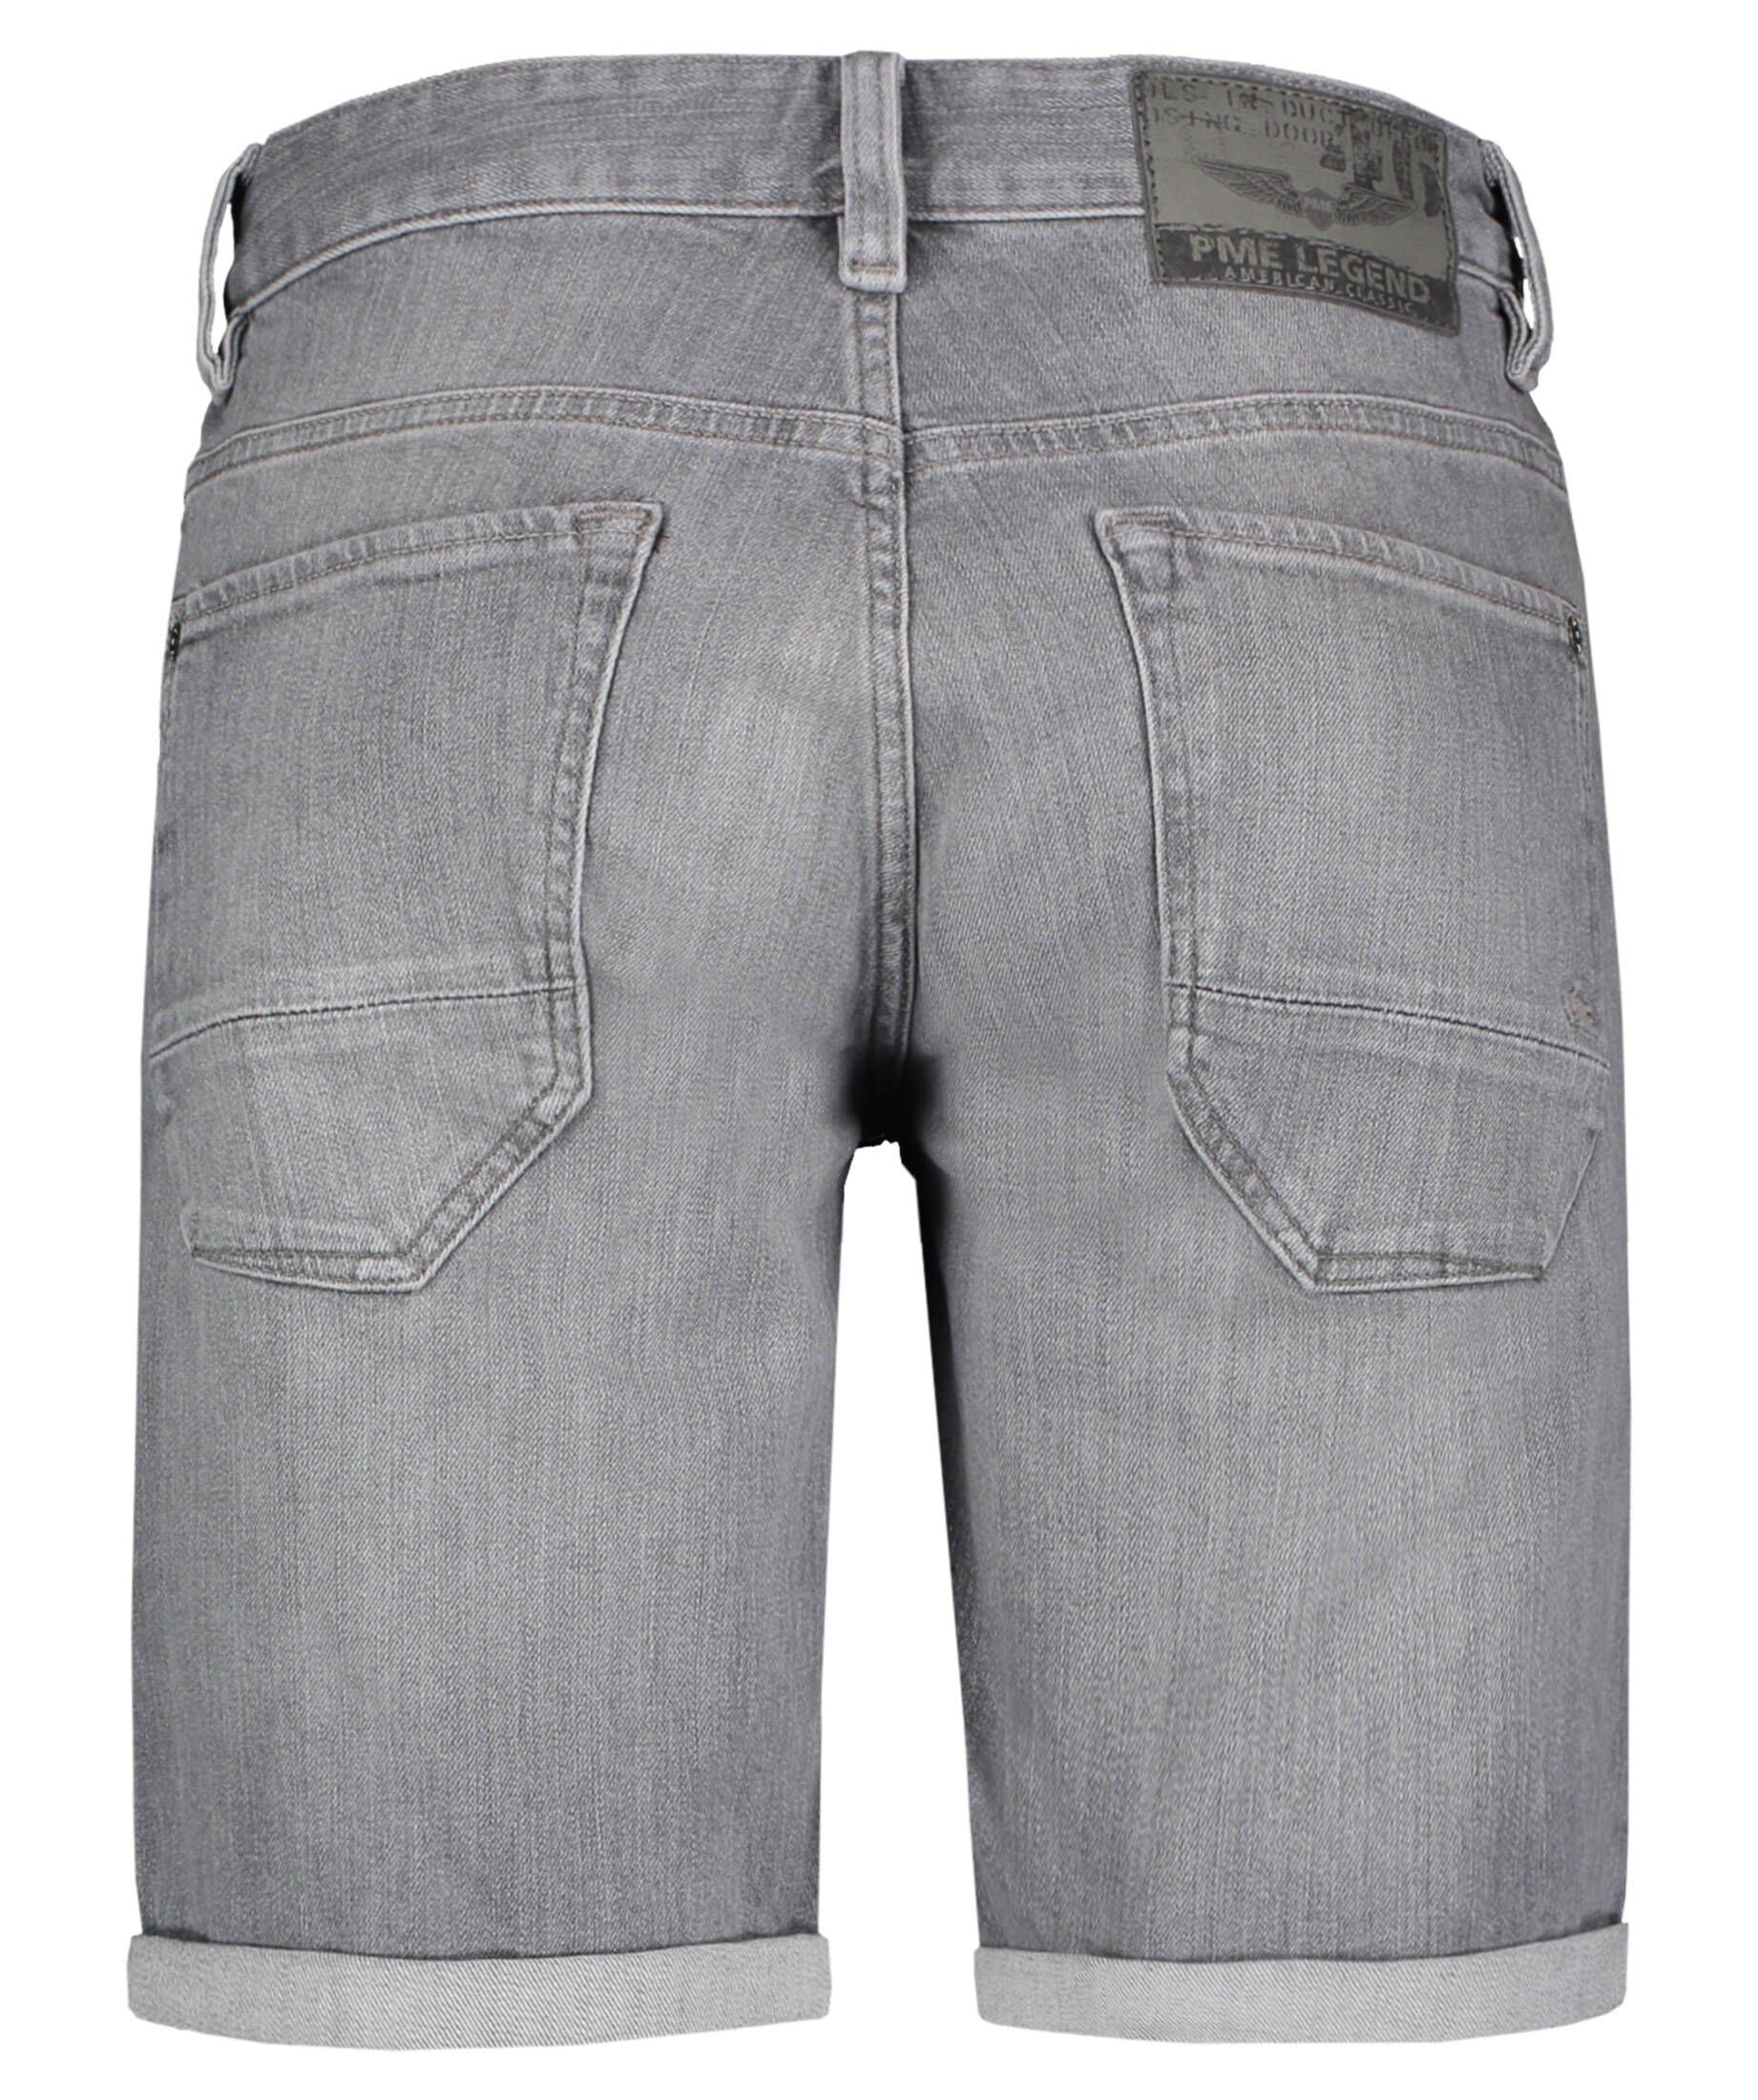 silber Jeansshorts NIGHTFLIGHT Regular (12) Fit Jeanshorts PME Herren LEGEND